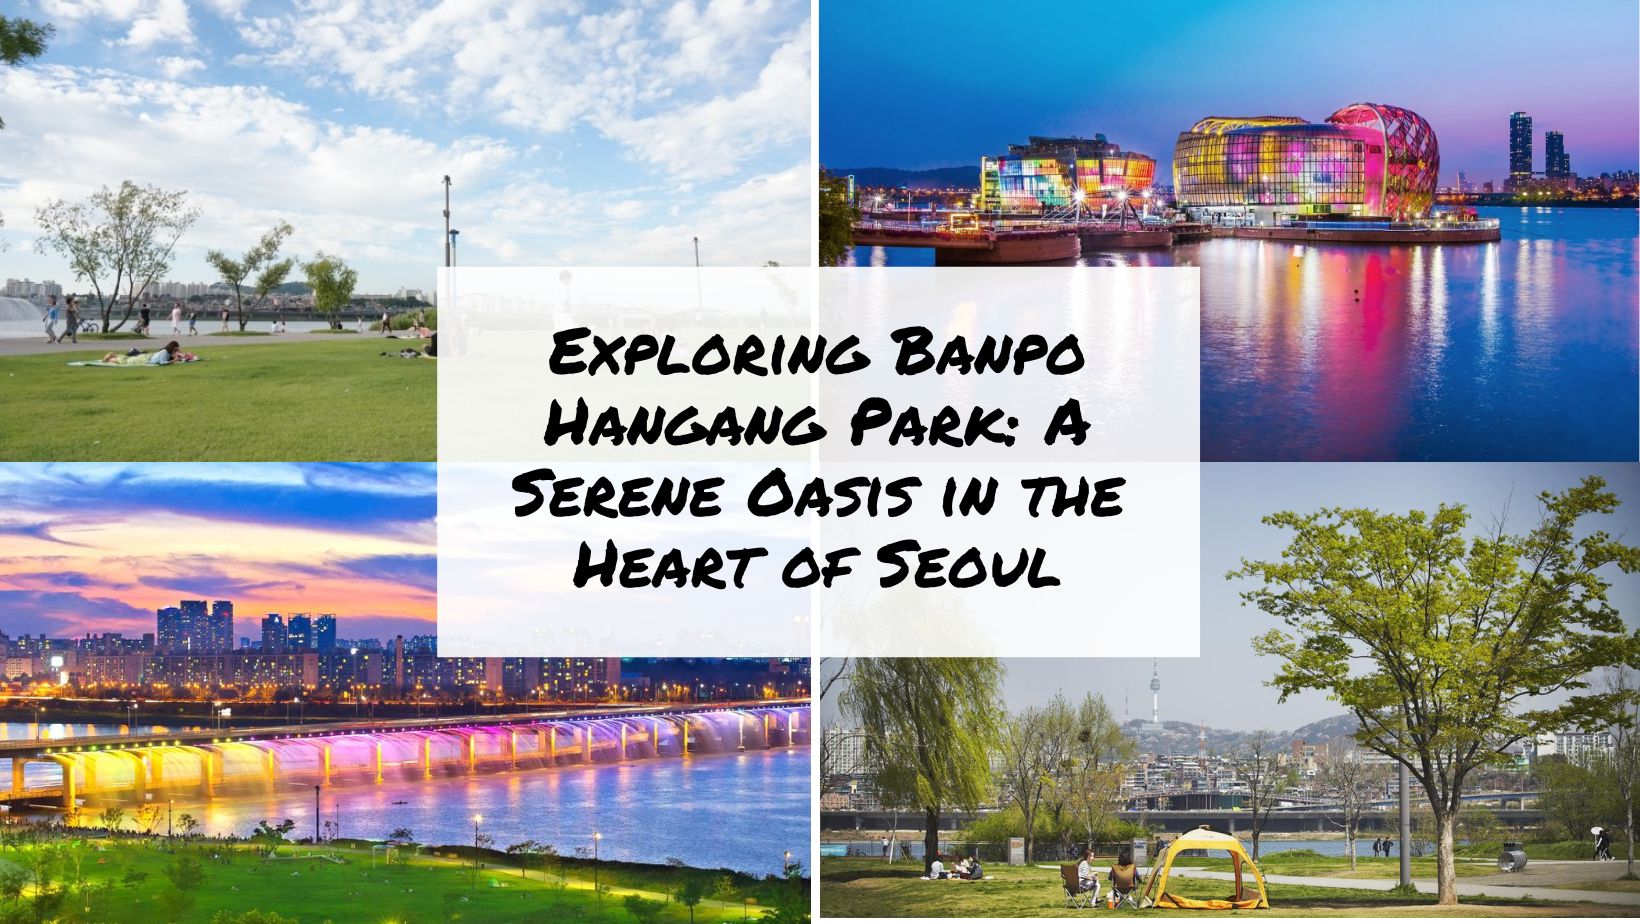 Exploring Banpo Hangang Park A Serene Oasis in the Heart of Seoul